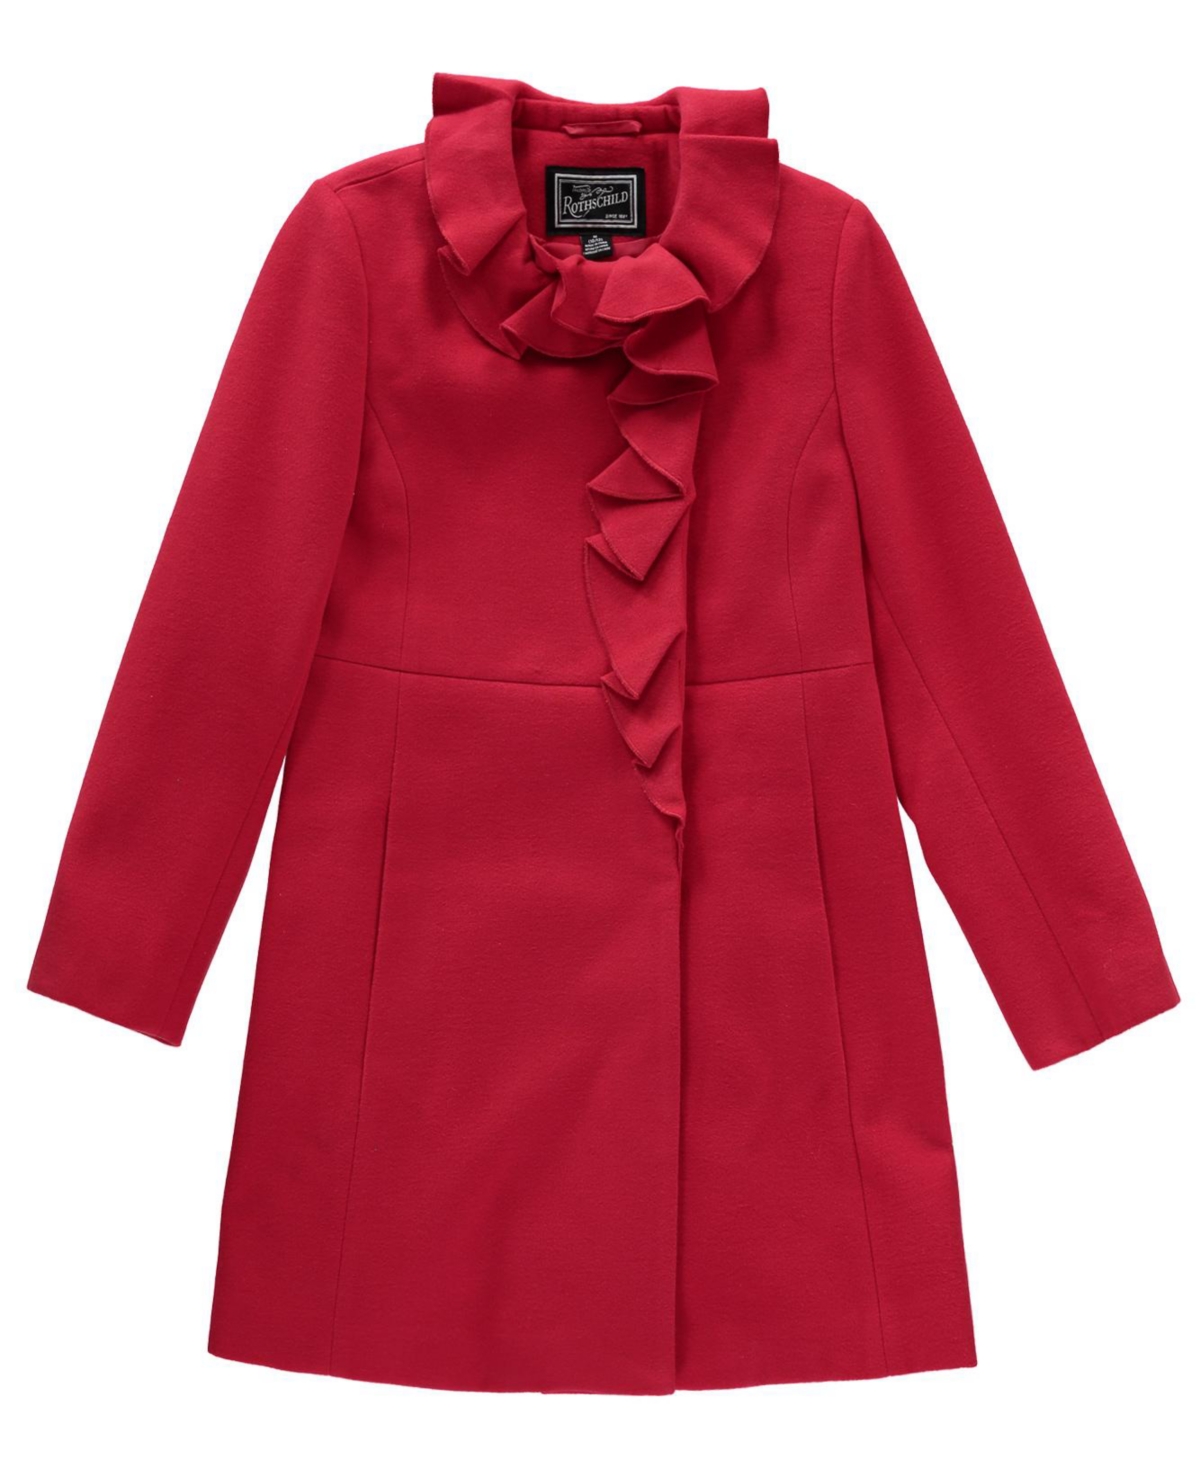 S Rothschild & Co Kids' Big Girls Ruffle Front Dress Coat In Scarlet Red